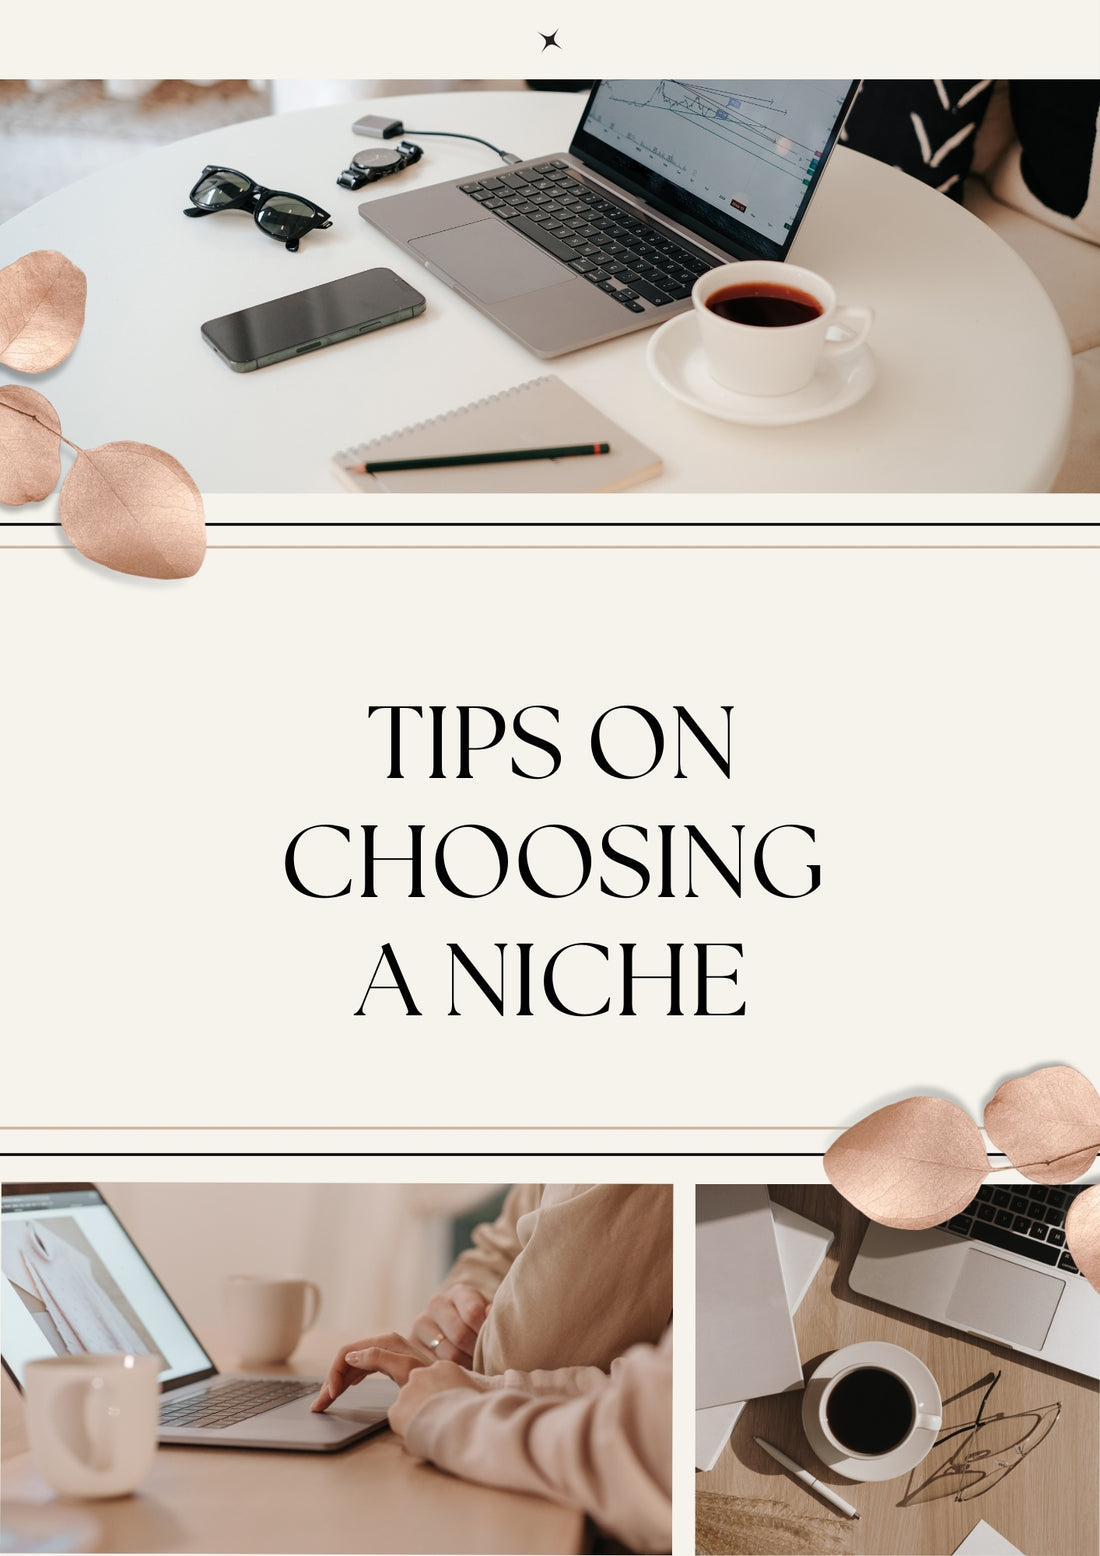 Tips on Choosing a Niche